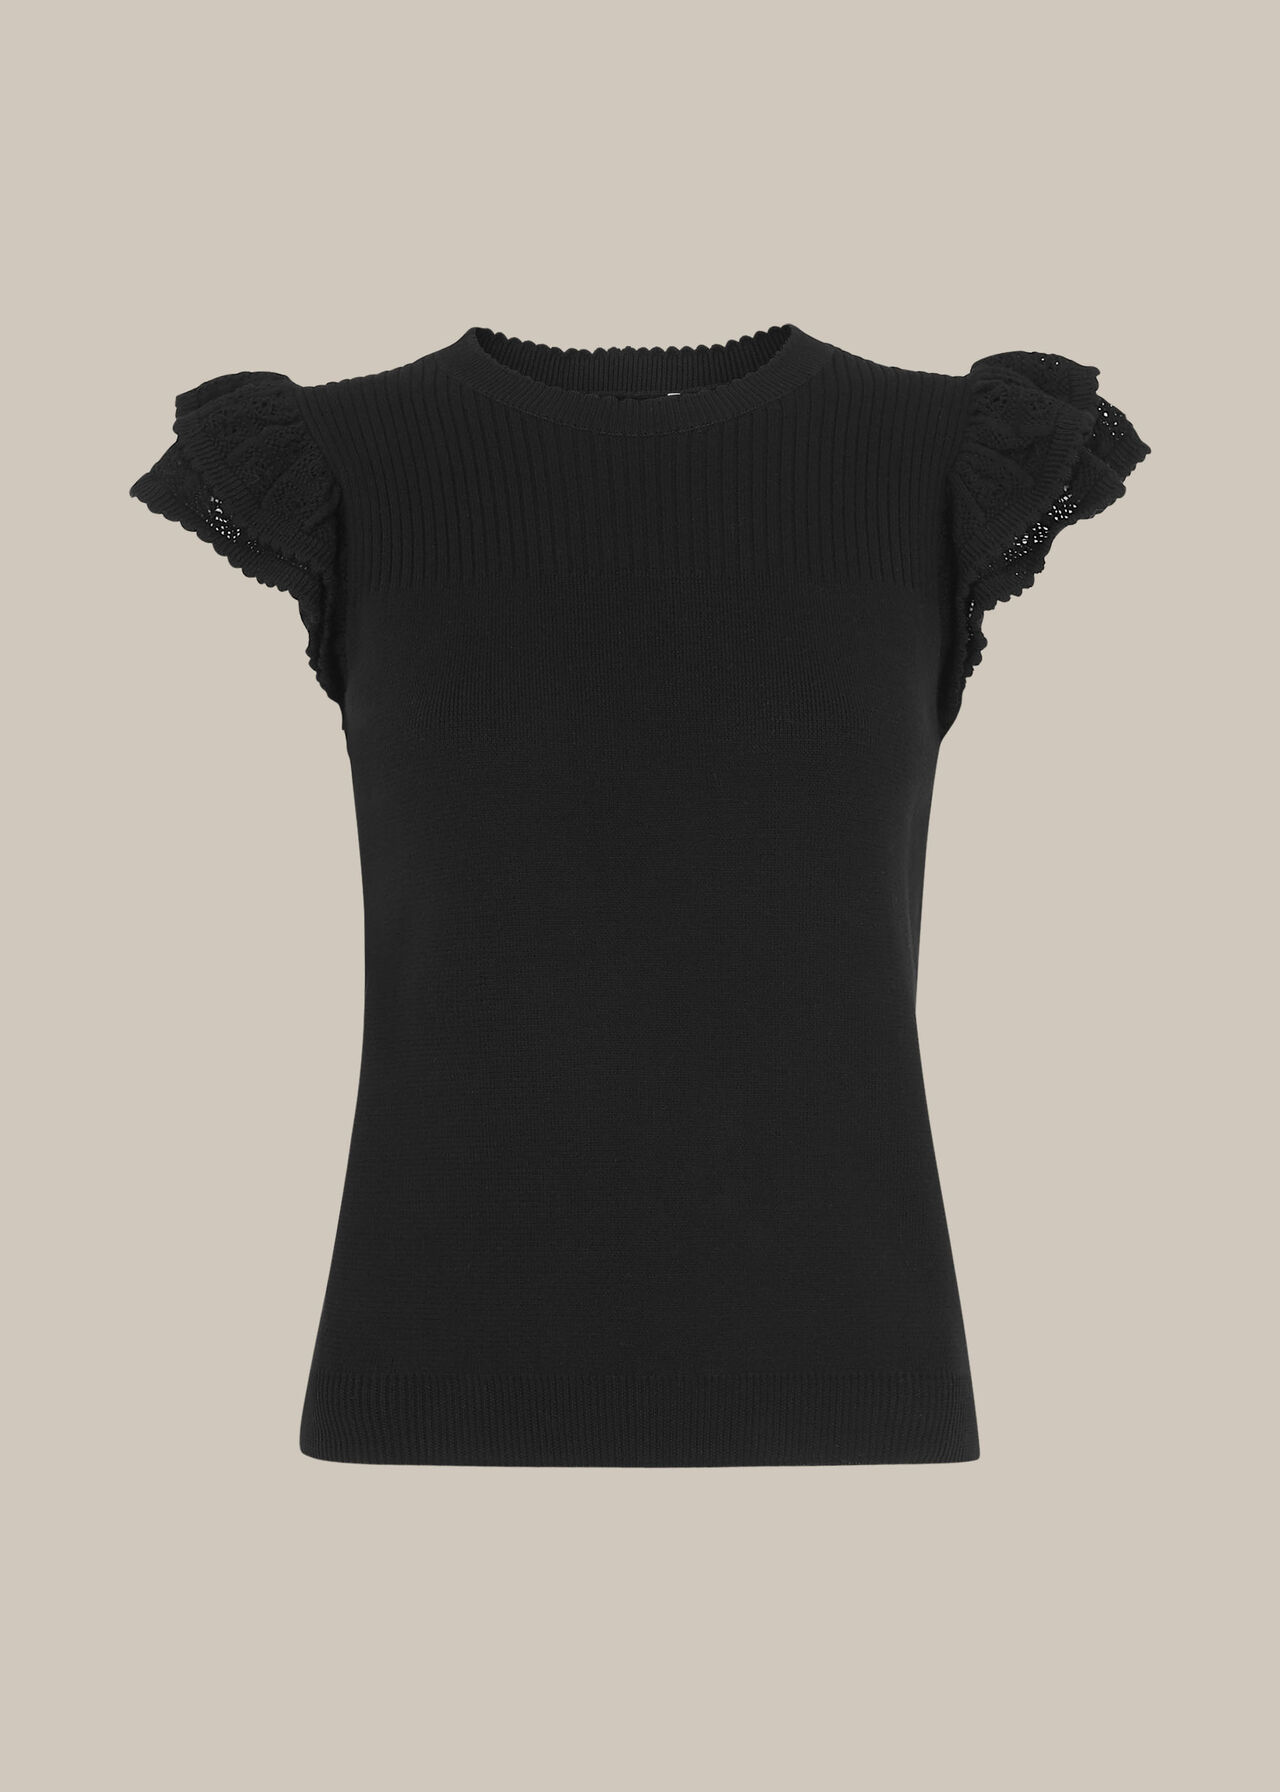 Black Pointelle Frill Sleeve Top | WHISTLES